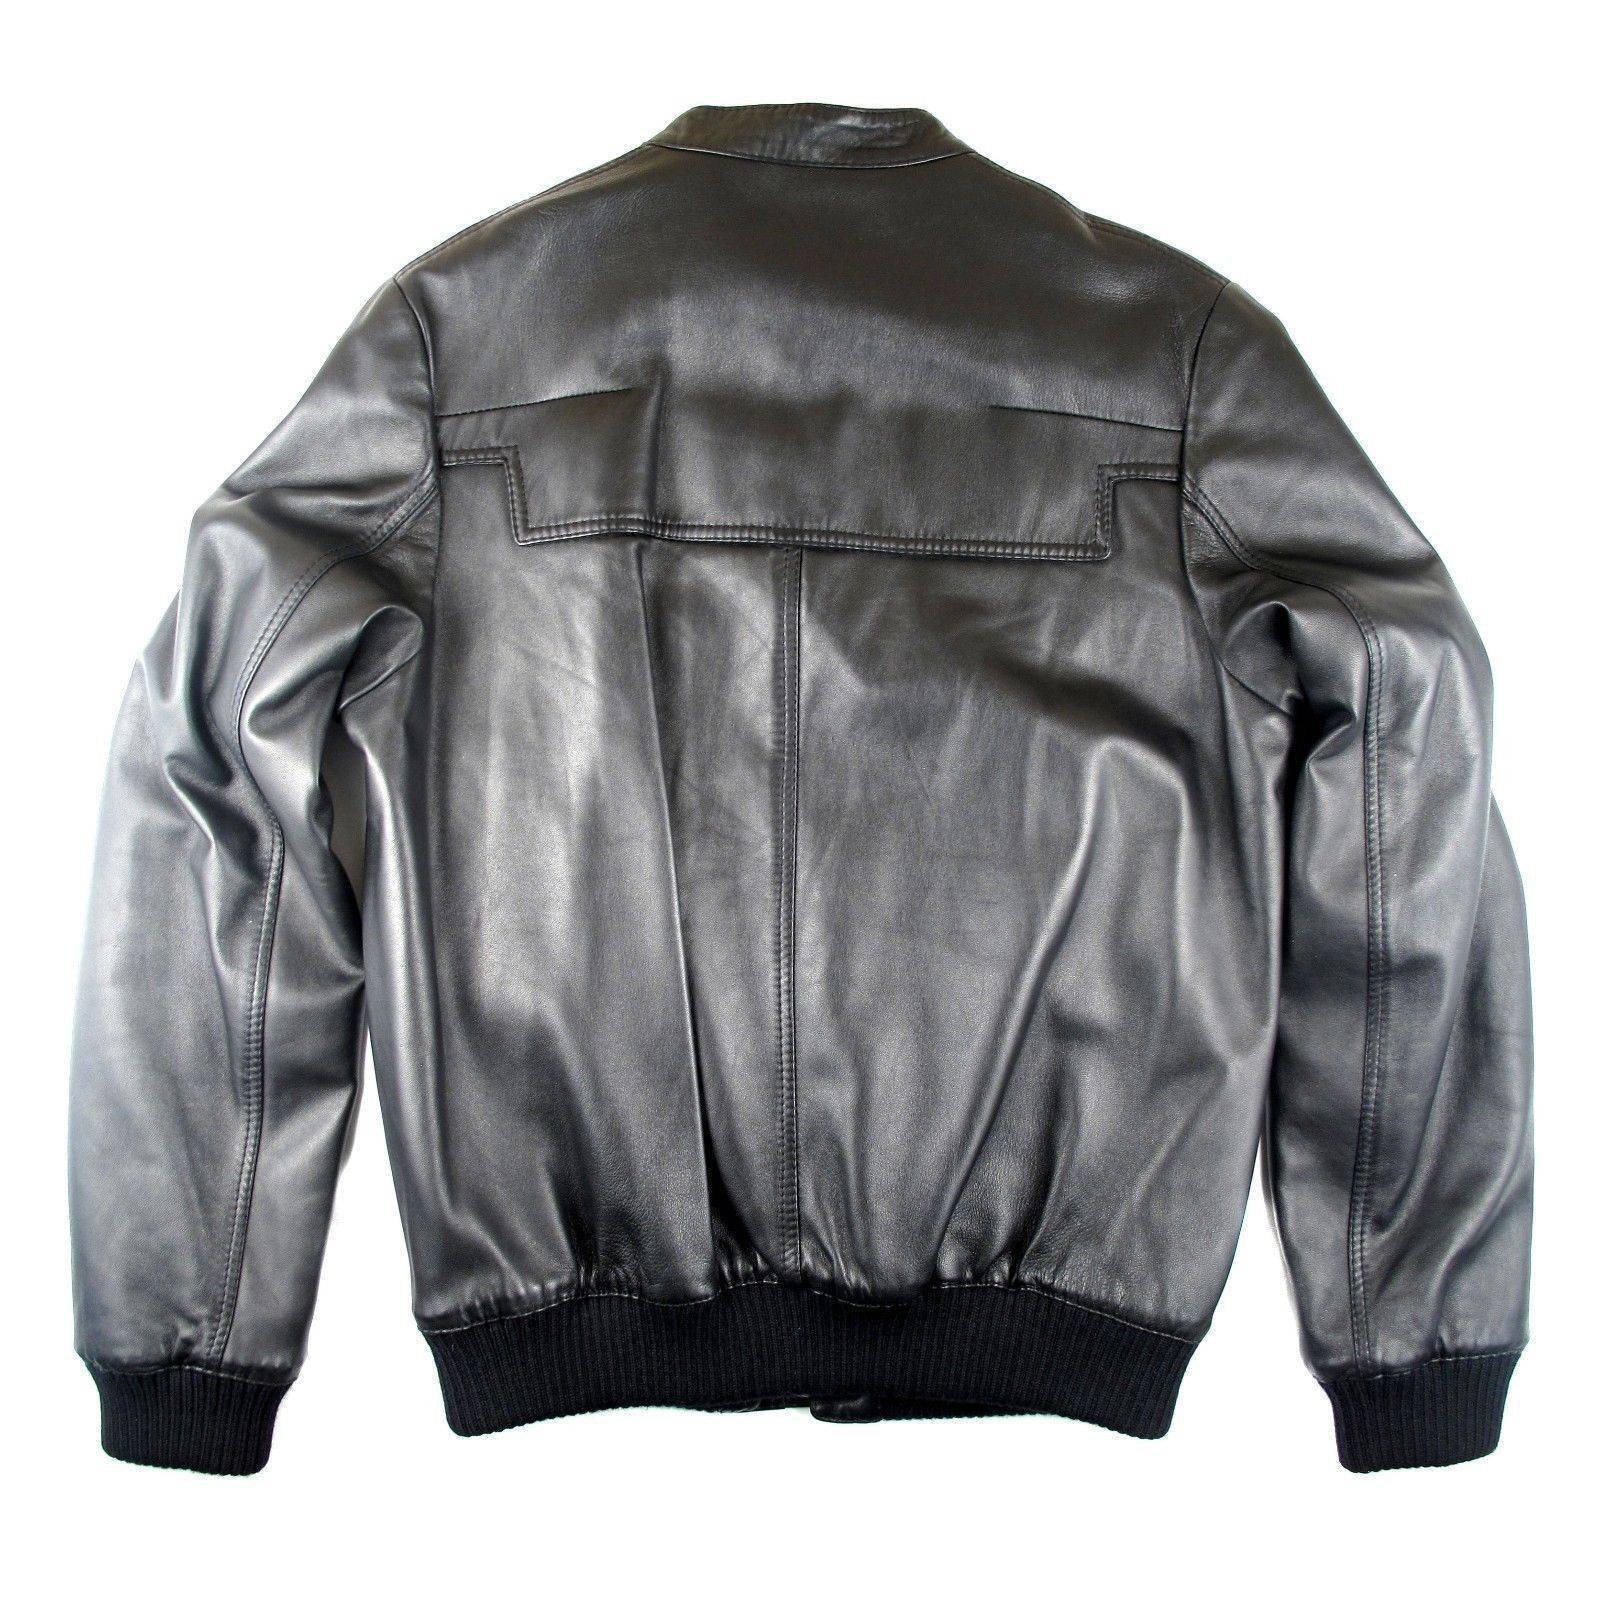 Dior Homme - Leather Jacket

Size:  52 - Large

Color: Black

Material: Leather

------------------------------------------------------------

Details:

- silver tone hardware

- zipper details

- adjustable buckle closure at